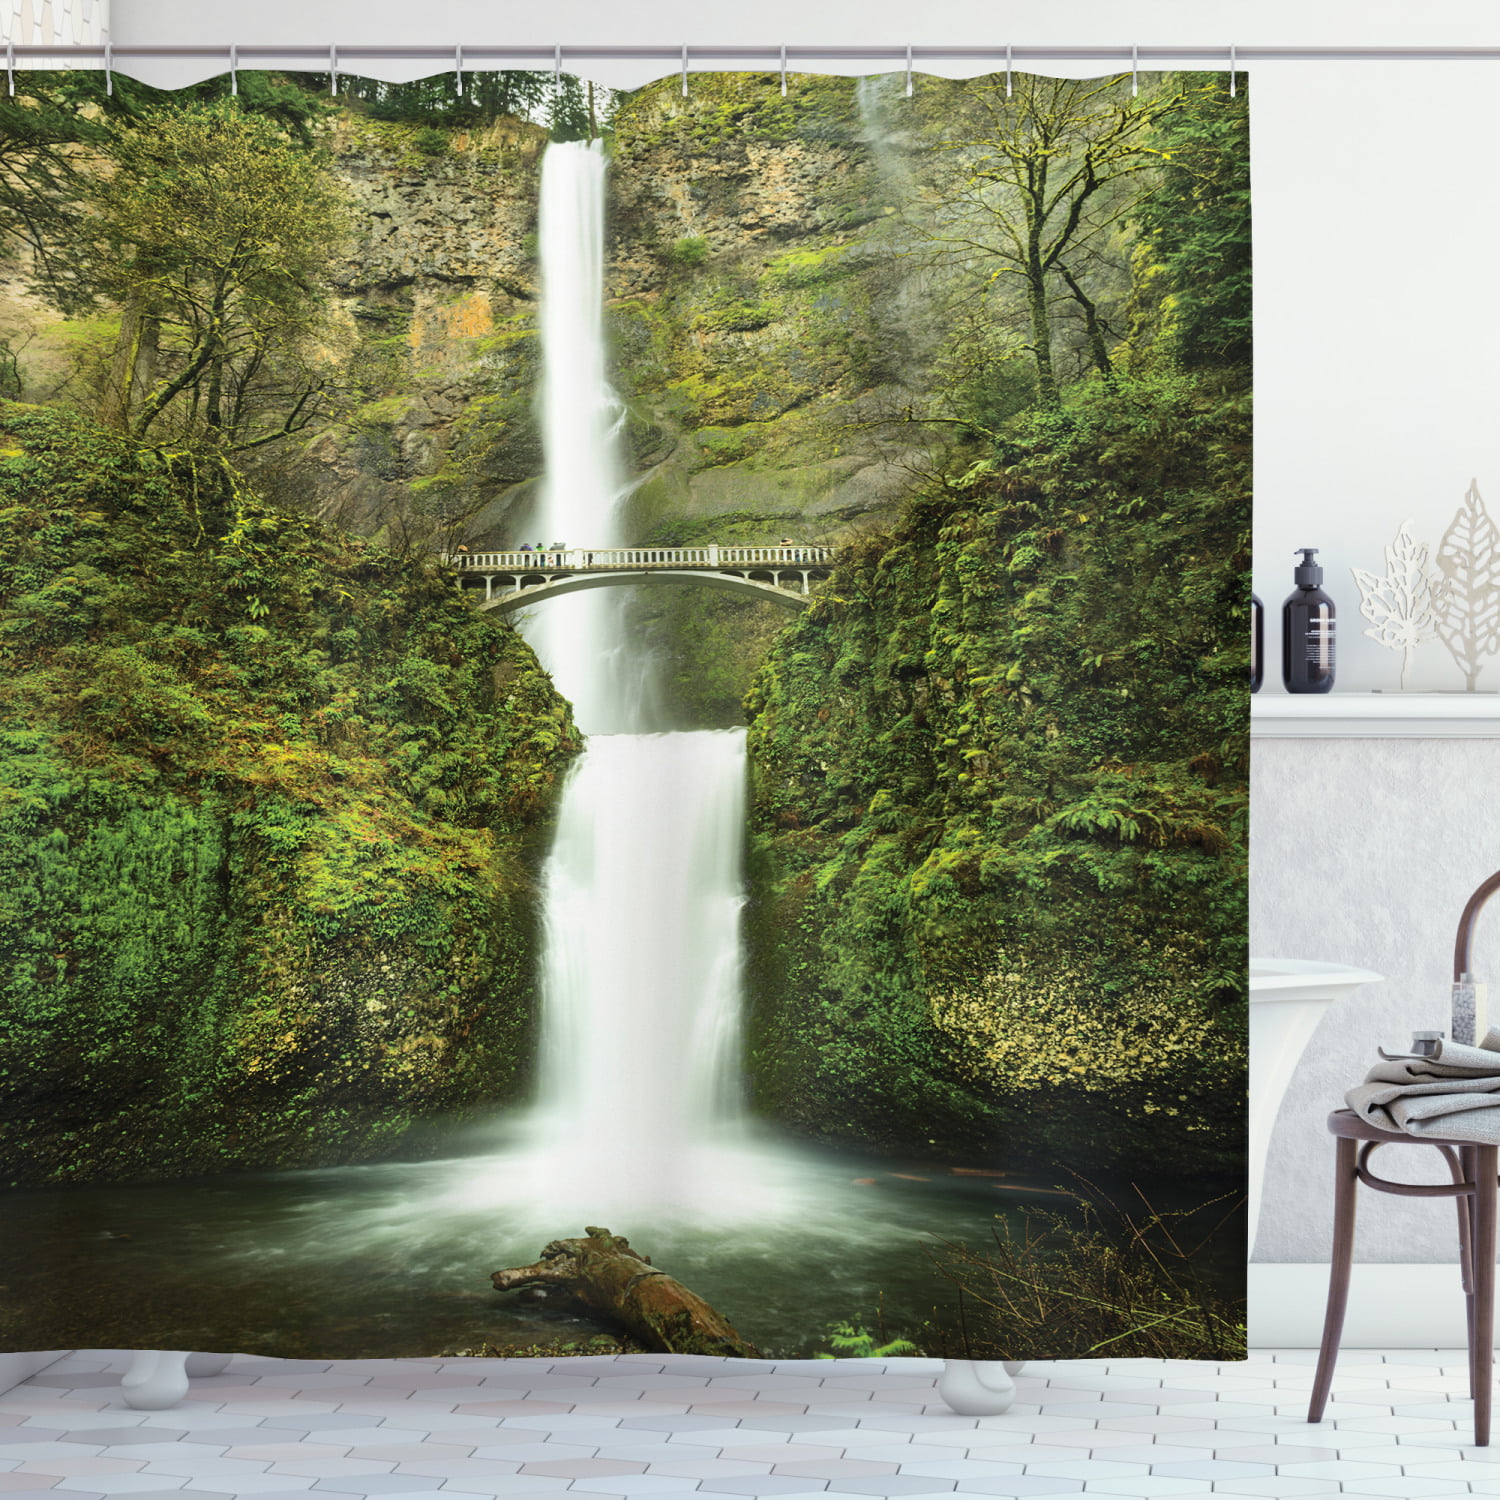 Rainforest Waterfall Bathroom Shower Curtain Waterproof Fabric w/12 Hooks new 